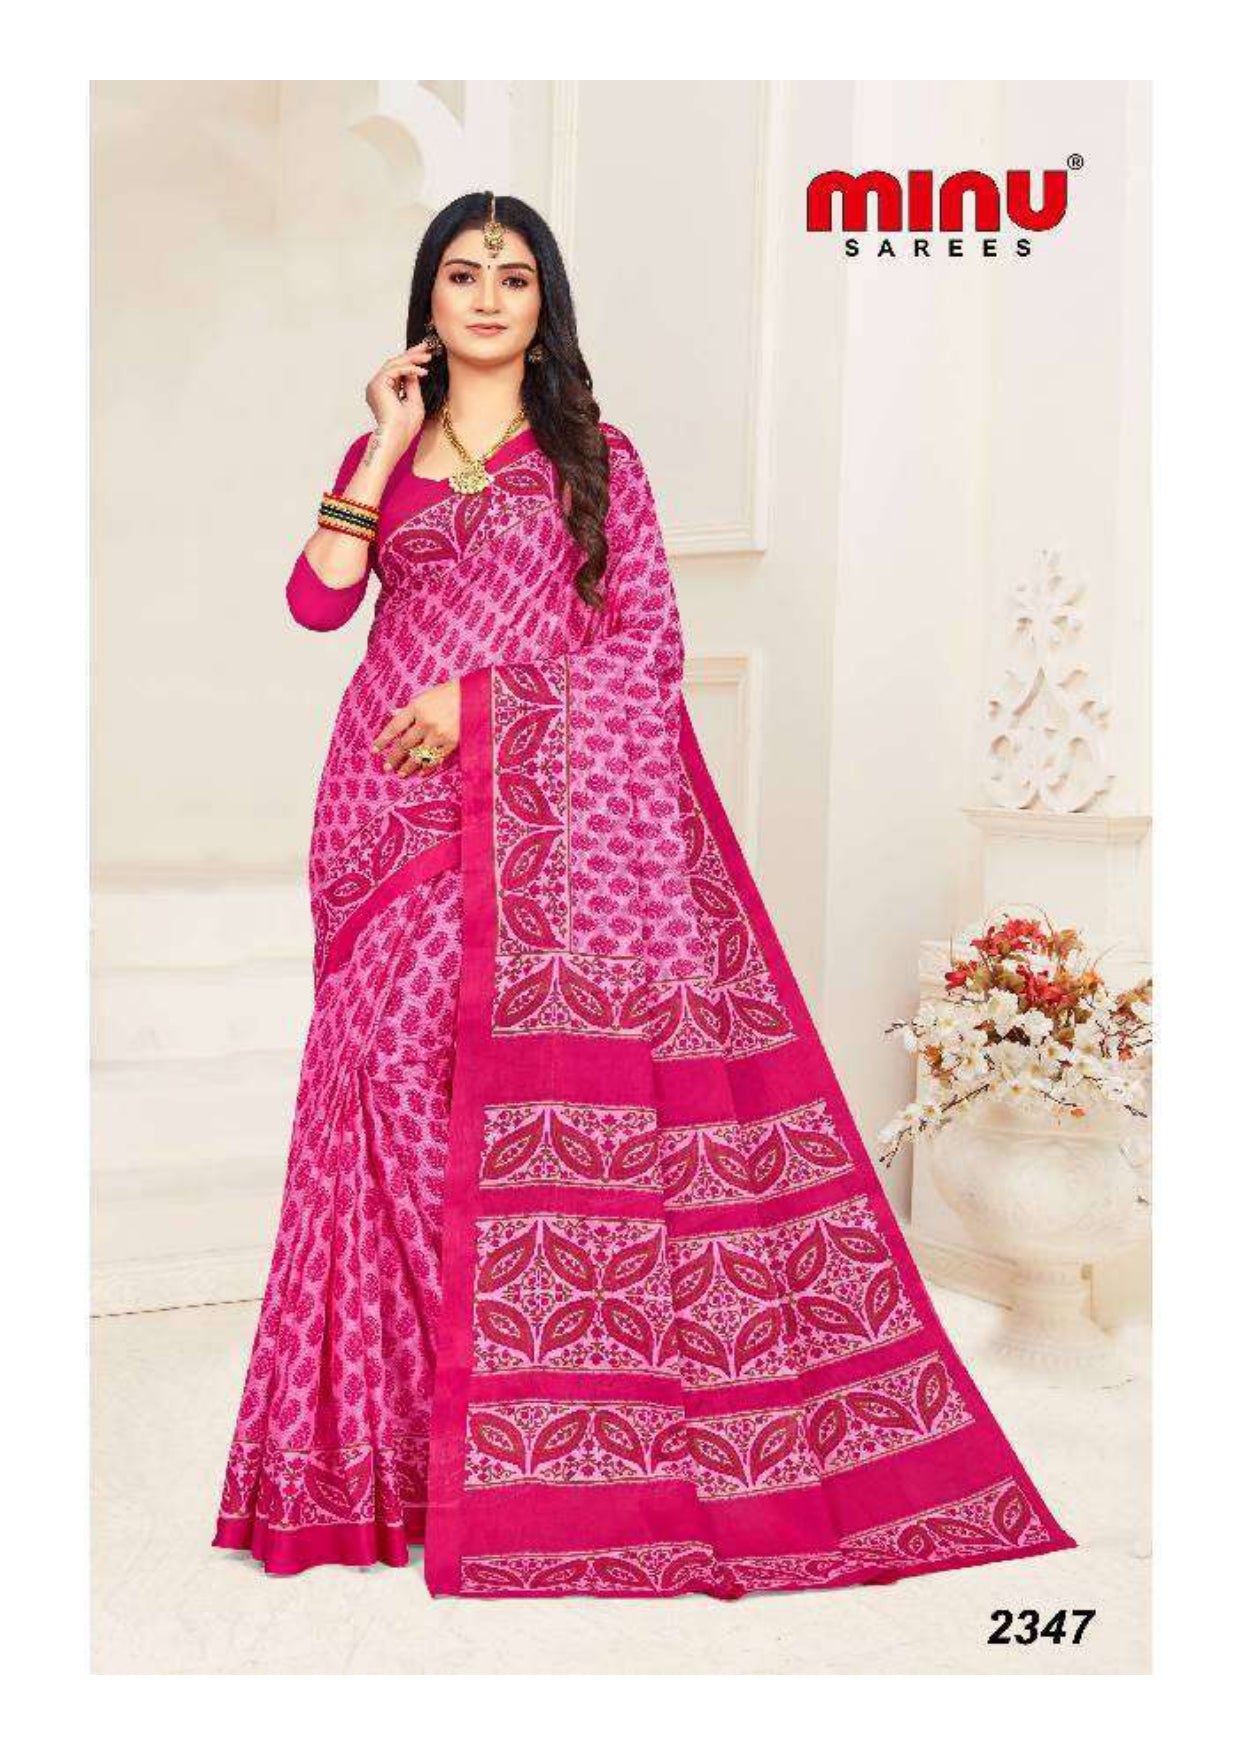 Pink color printed saree image online